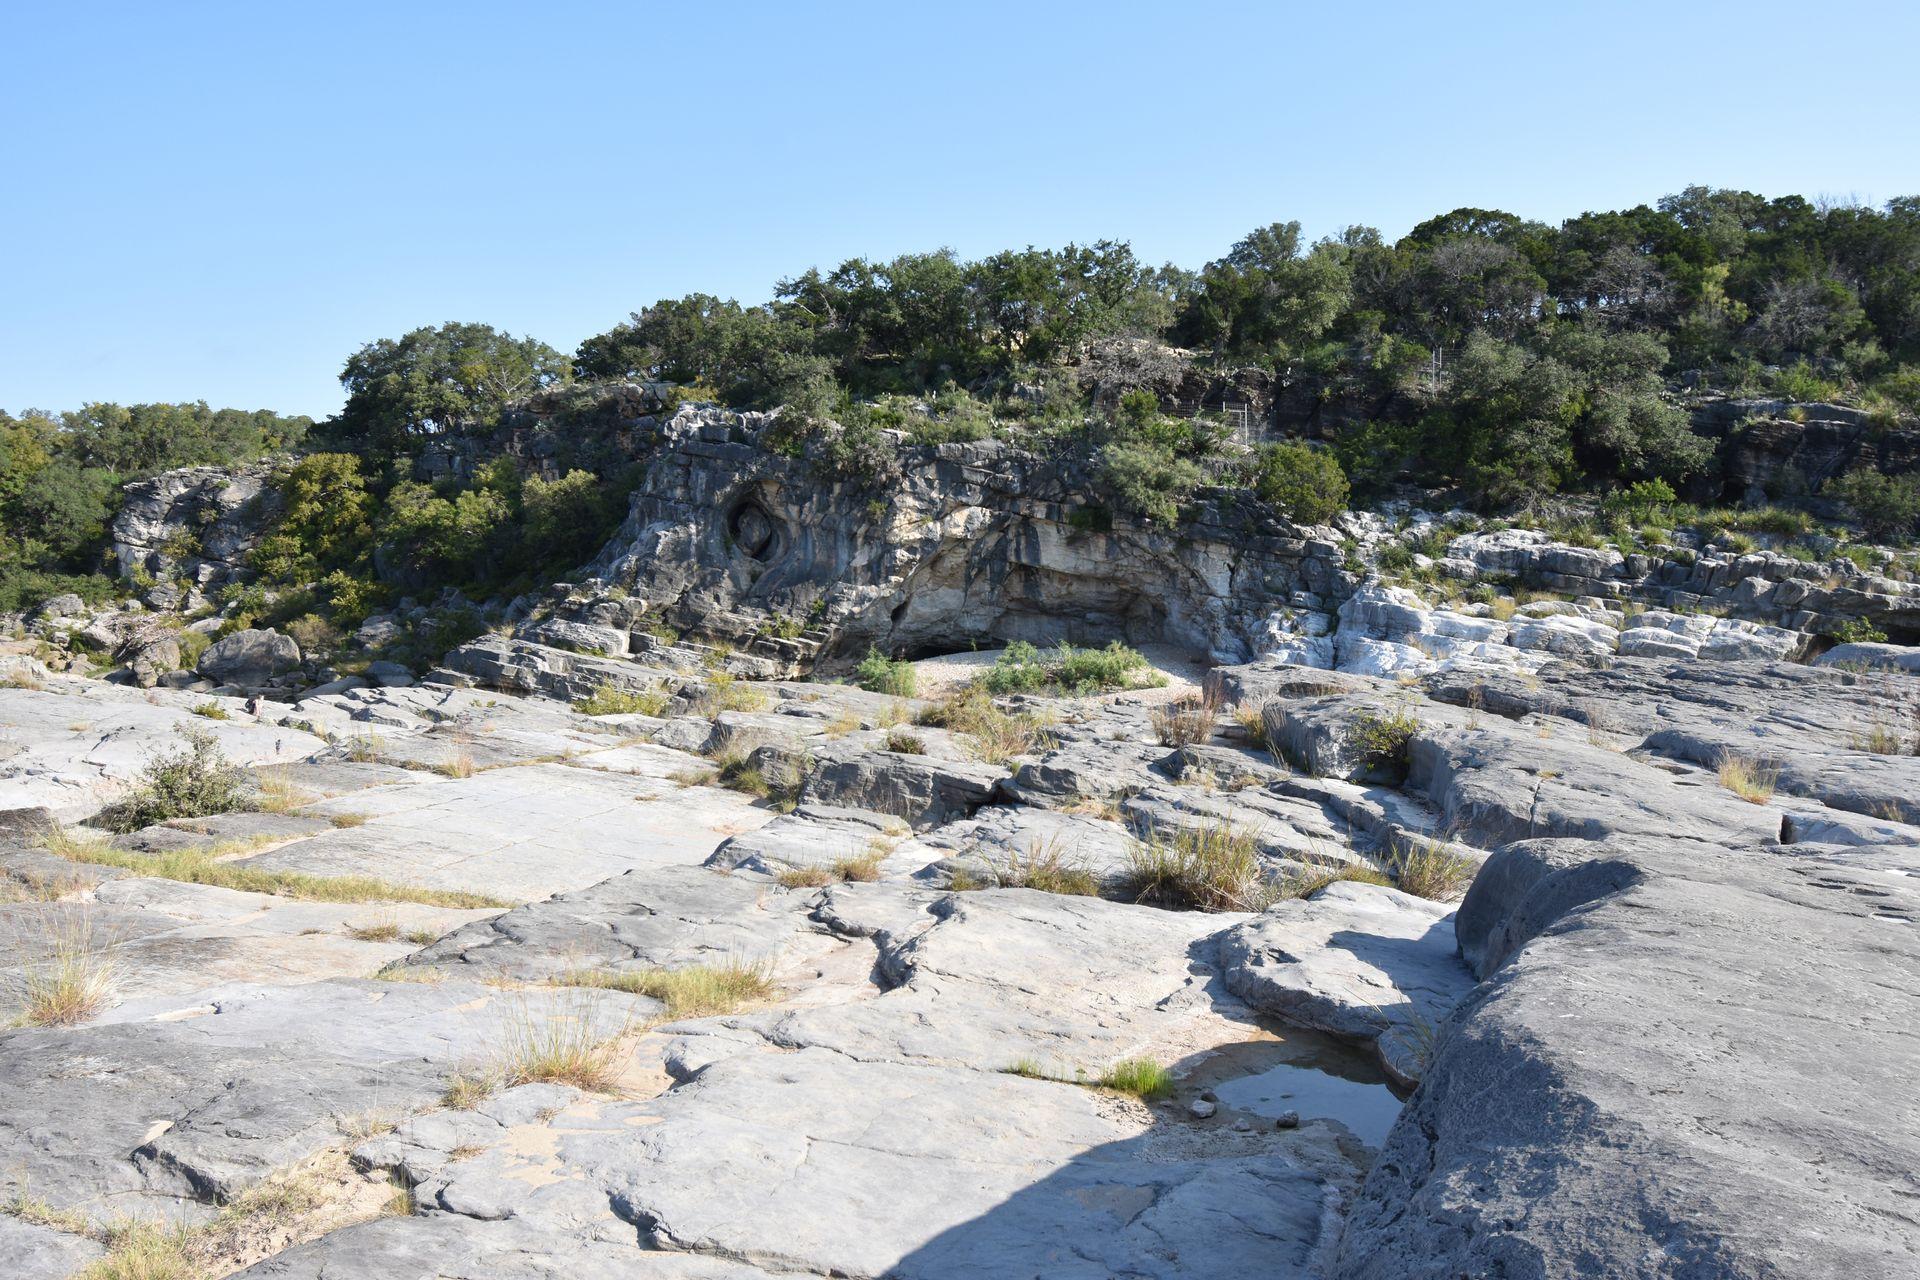 An area of light-colored limestone rocks